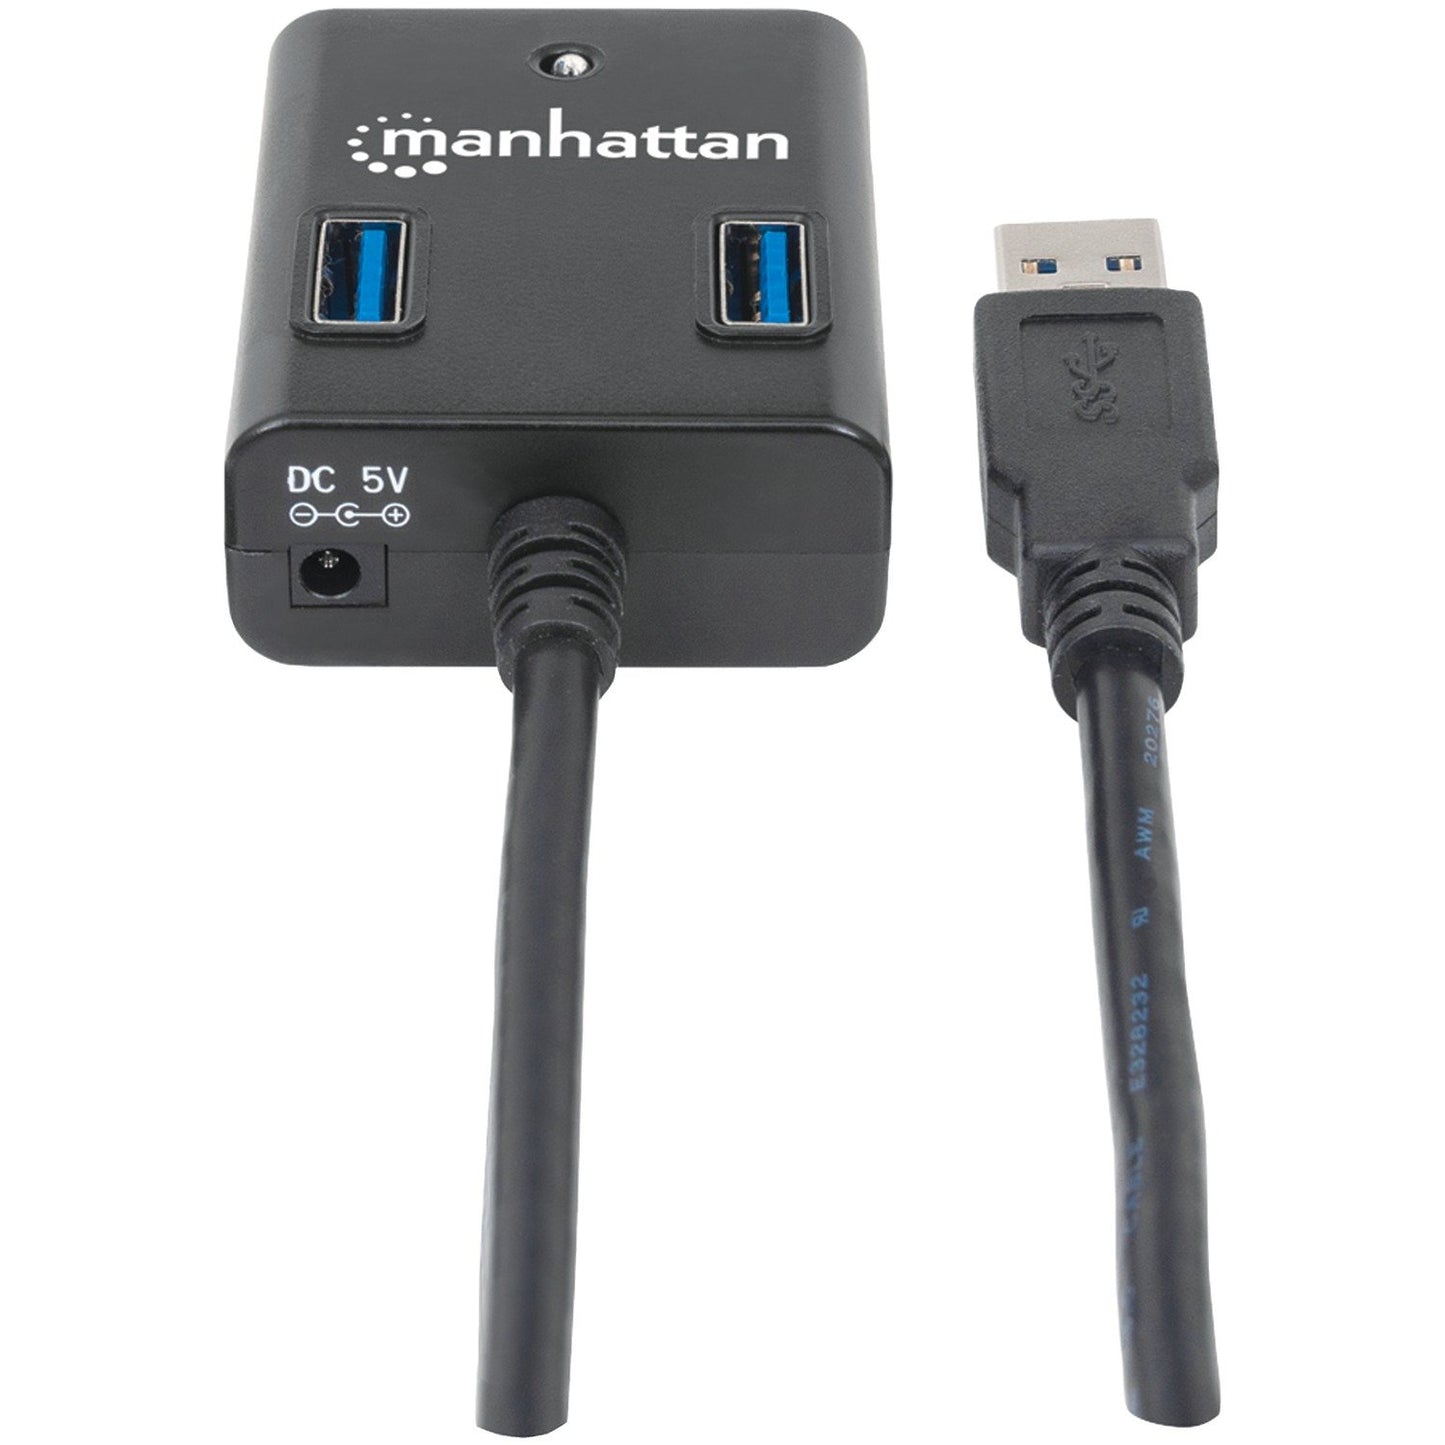 MANHATTAN 162296 3.0 4-Port USB Hub